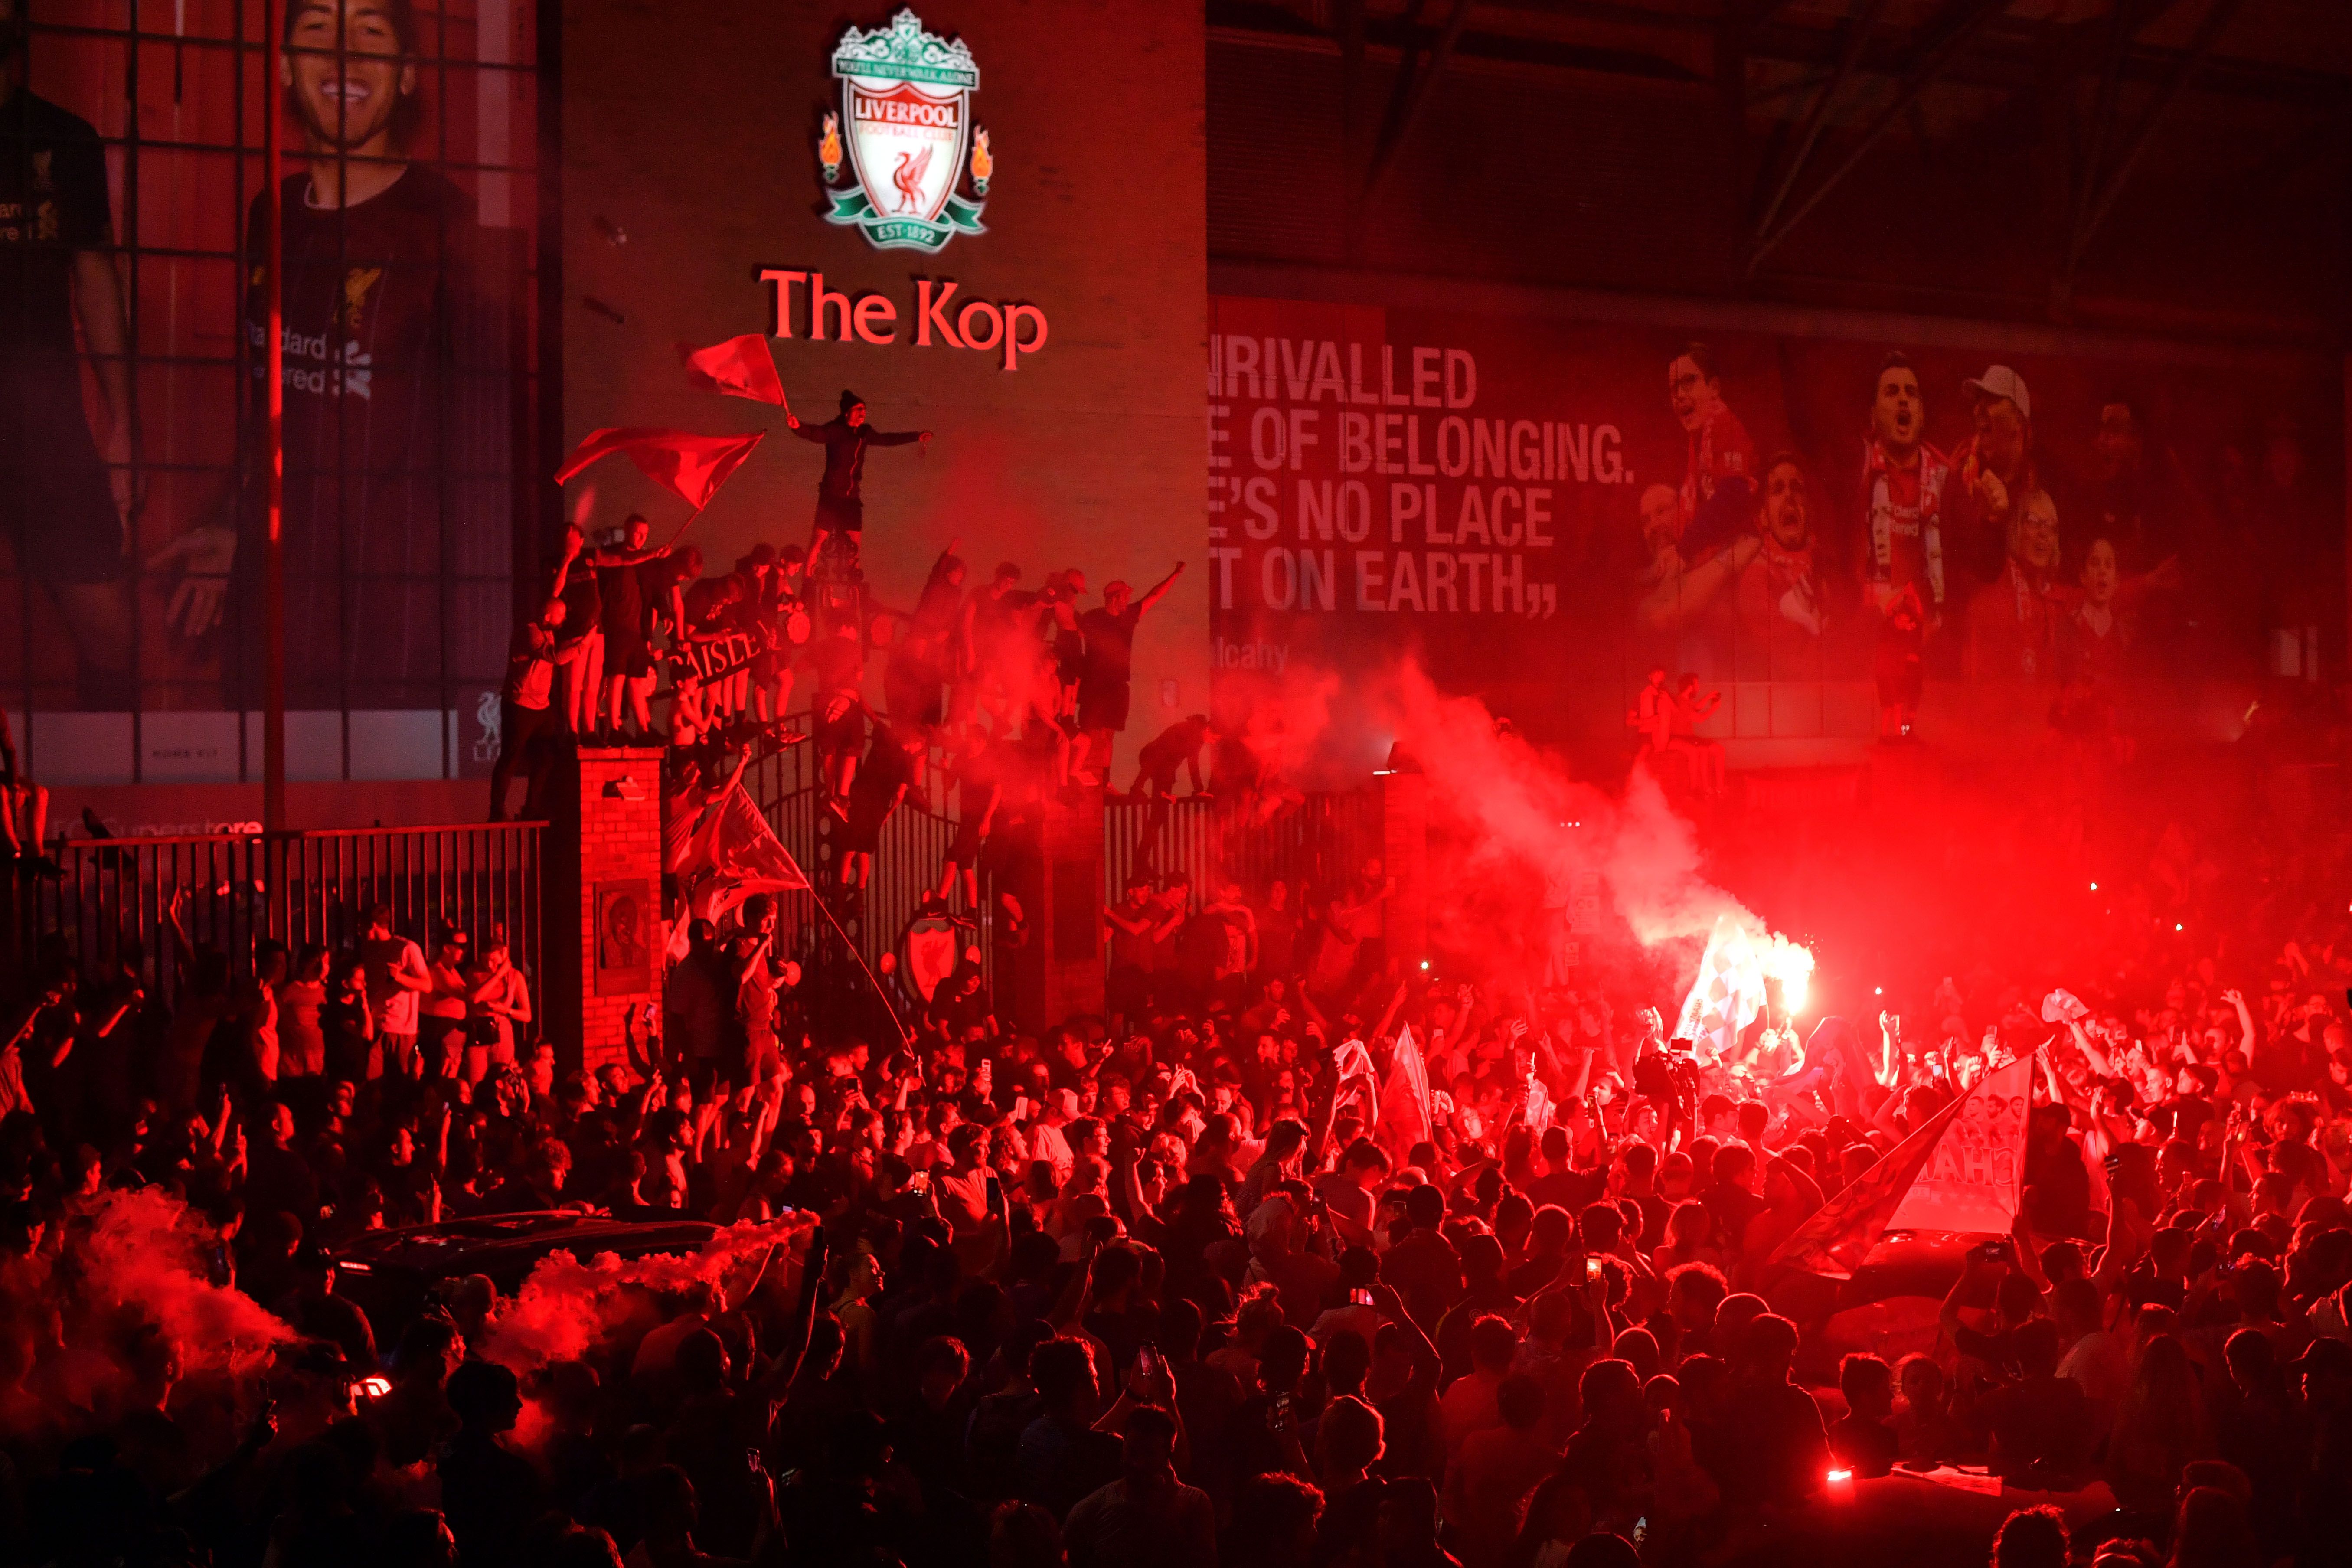 Liverpool fans celebrating